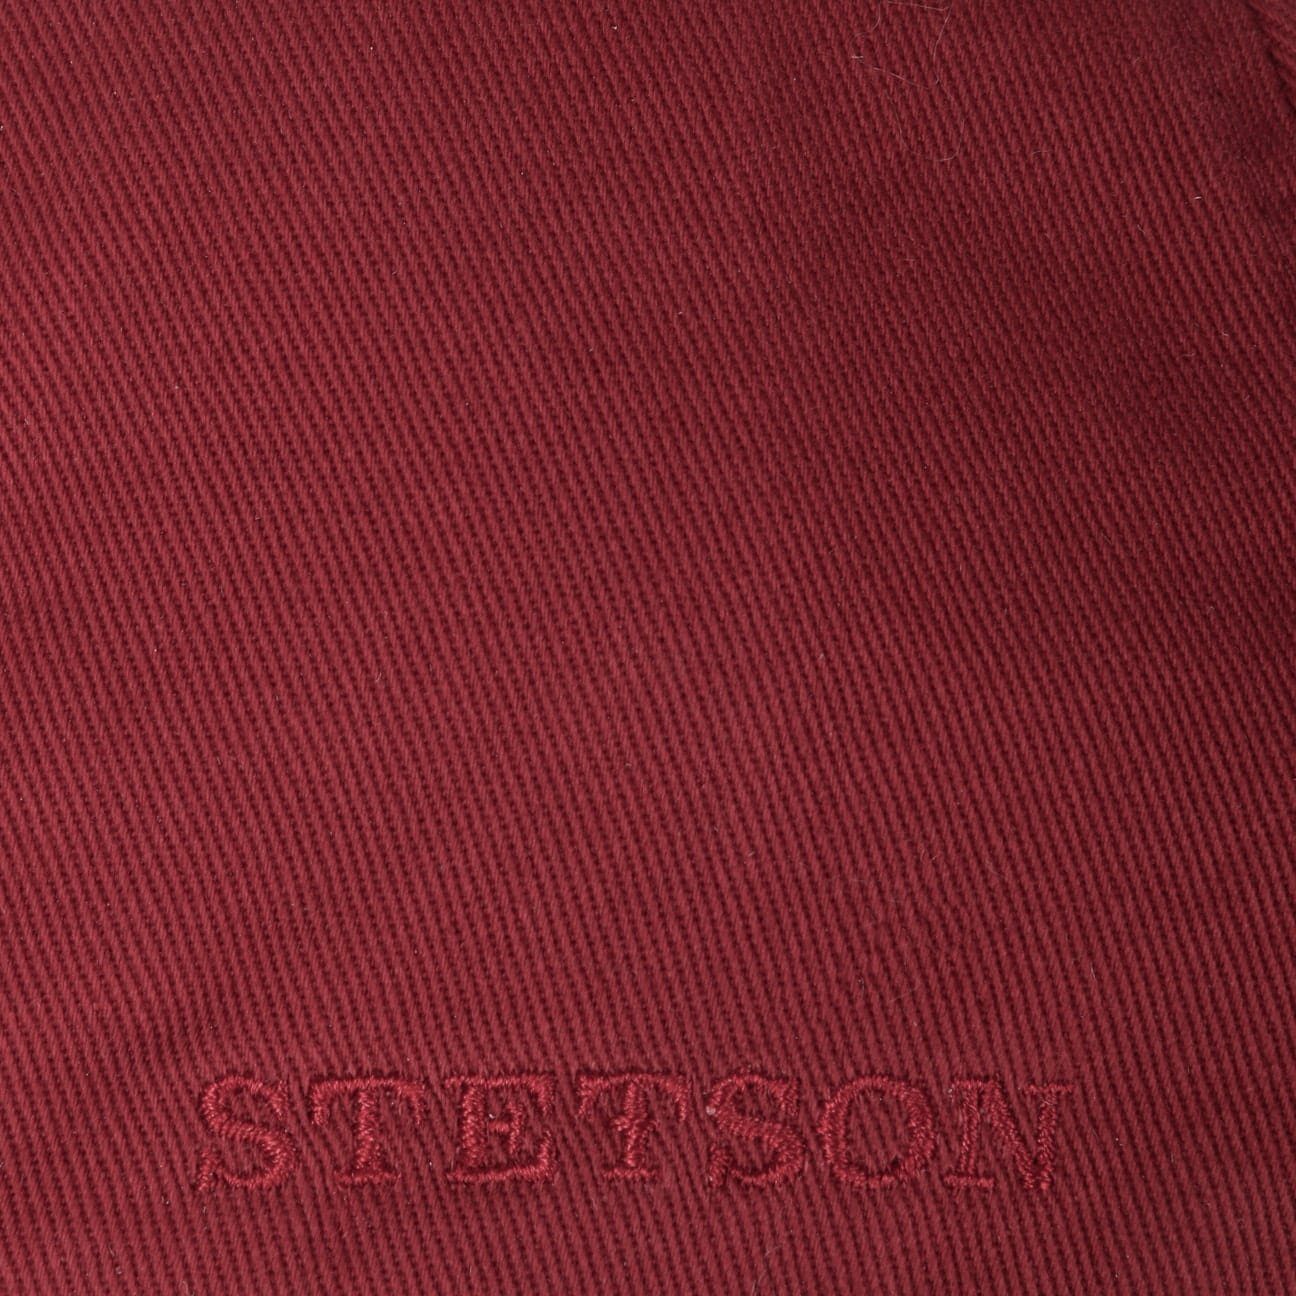 Stetson Baseball Cap (1-St) Basecap Metallschnalle bordeaux